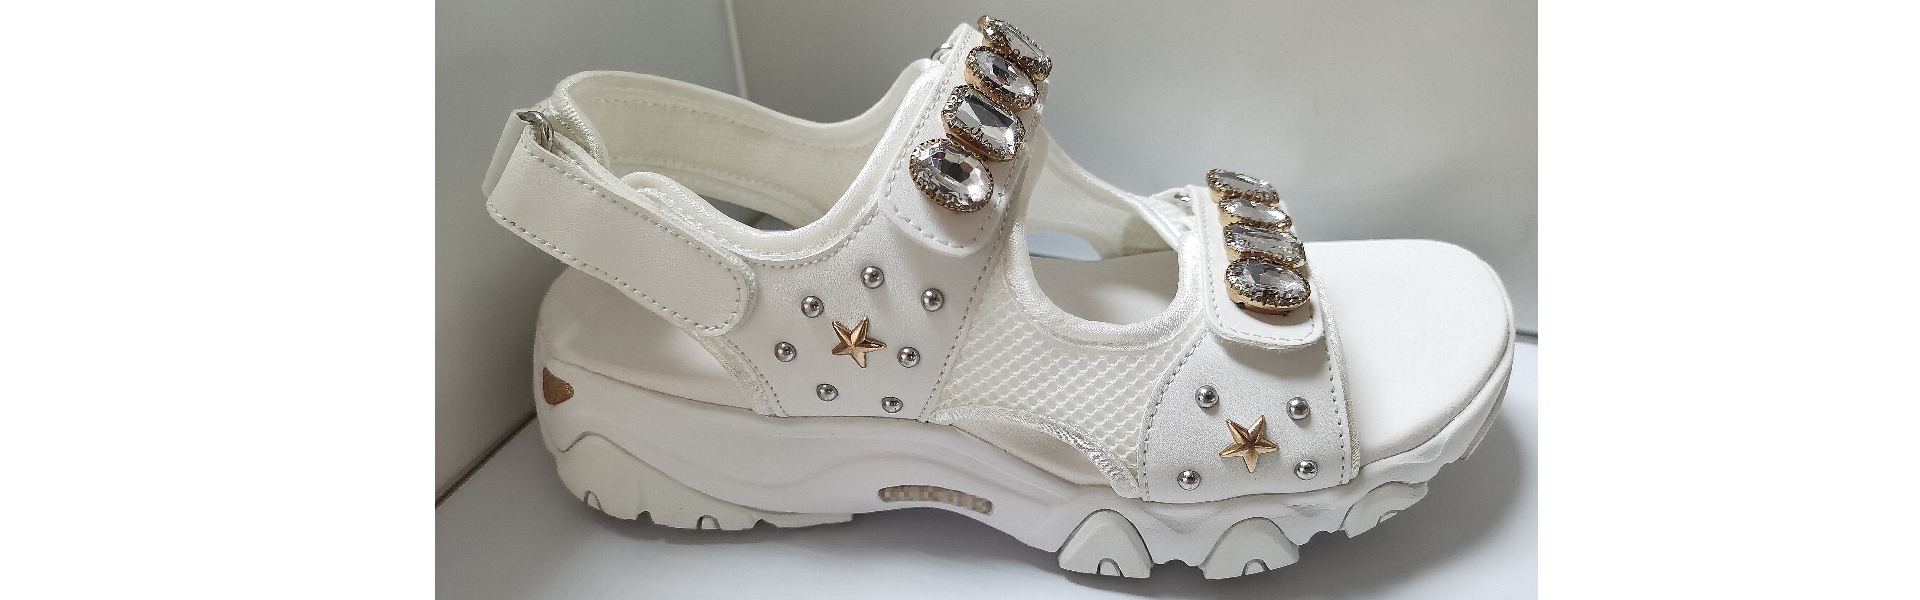 buckles ฮาร์ดแวร์, หัวเข็มขัดรองเท้าพลาสติก, ดอกไม้รองเท้า \/ เจาะร้อน,Dongguan Rong Yun Hardware Plastic Products Co., Limited